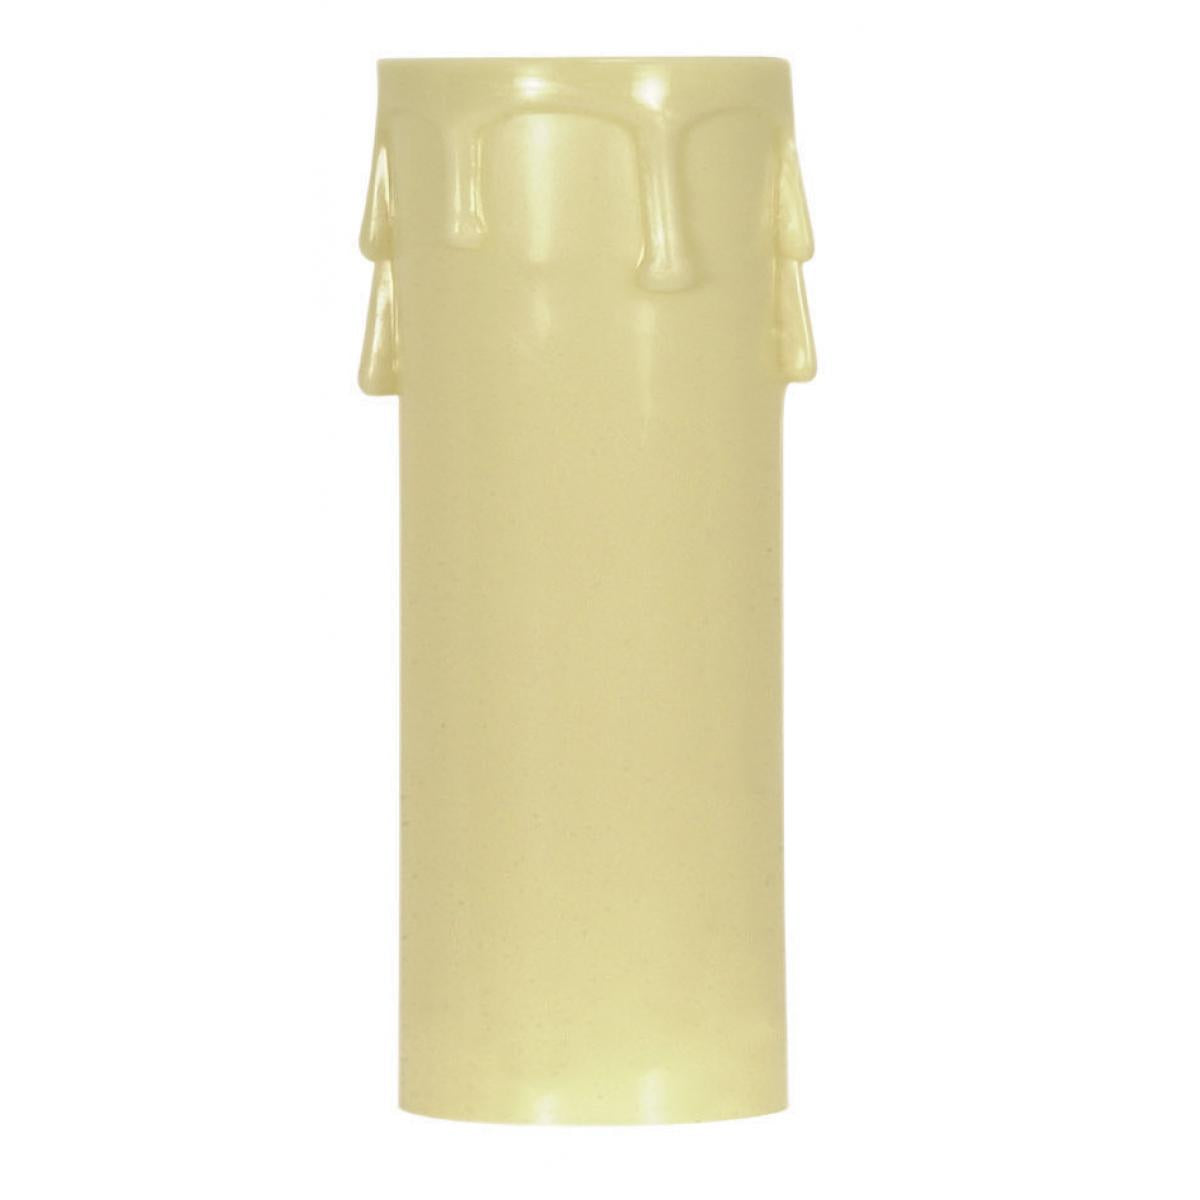 Ivory Plastic Candle Cover w/ Ivory Drip, Medium Base